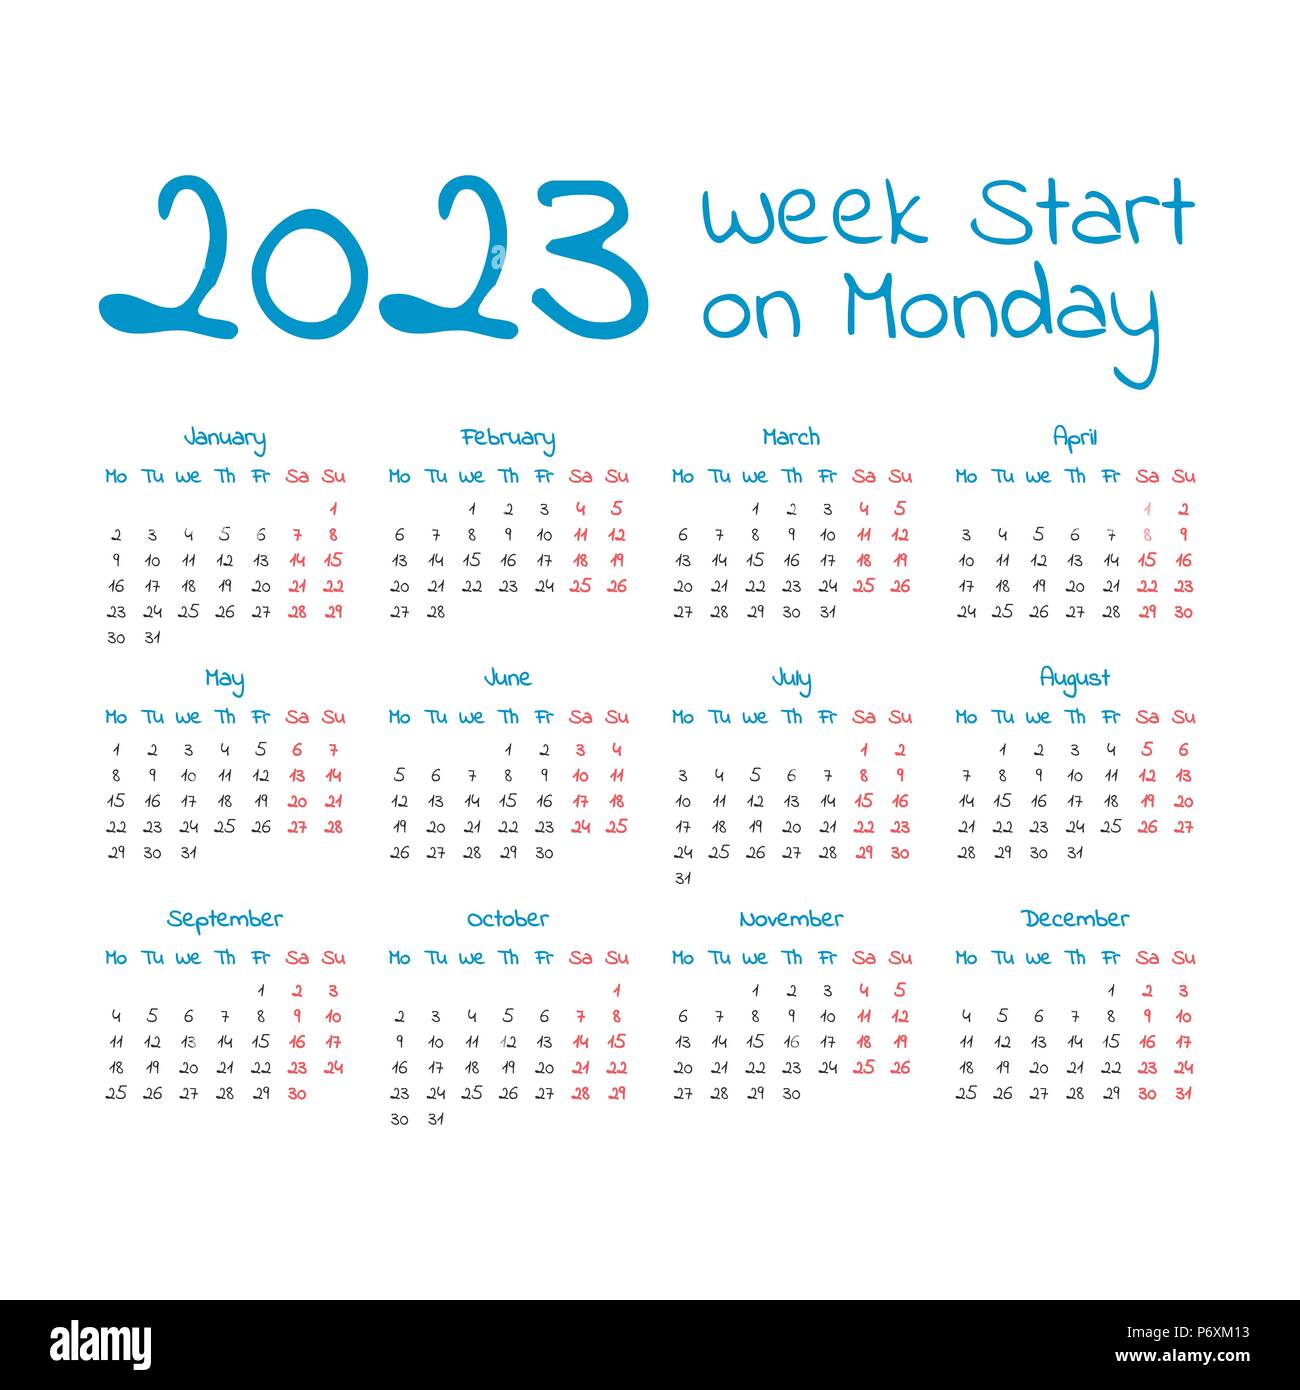 2023-calendar-with-weeks-summafinance-com